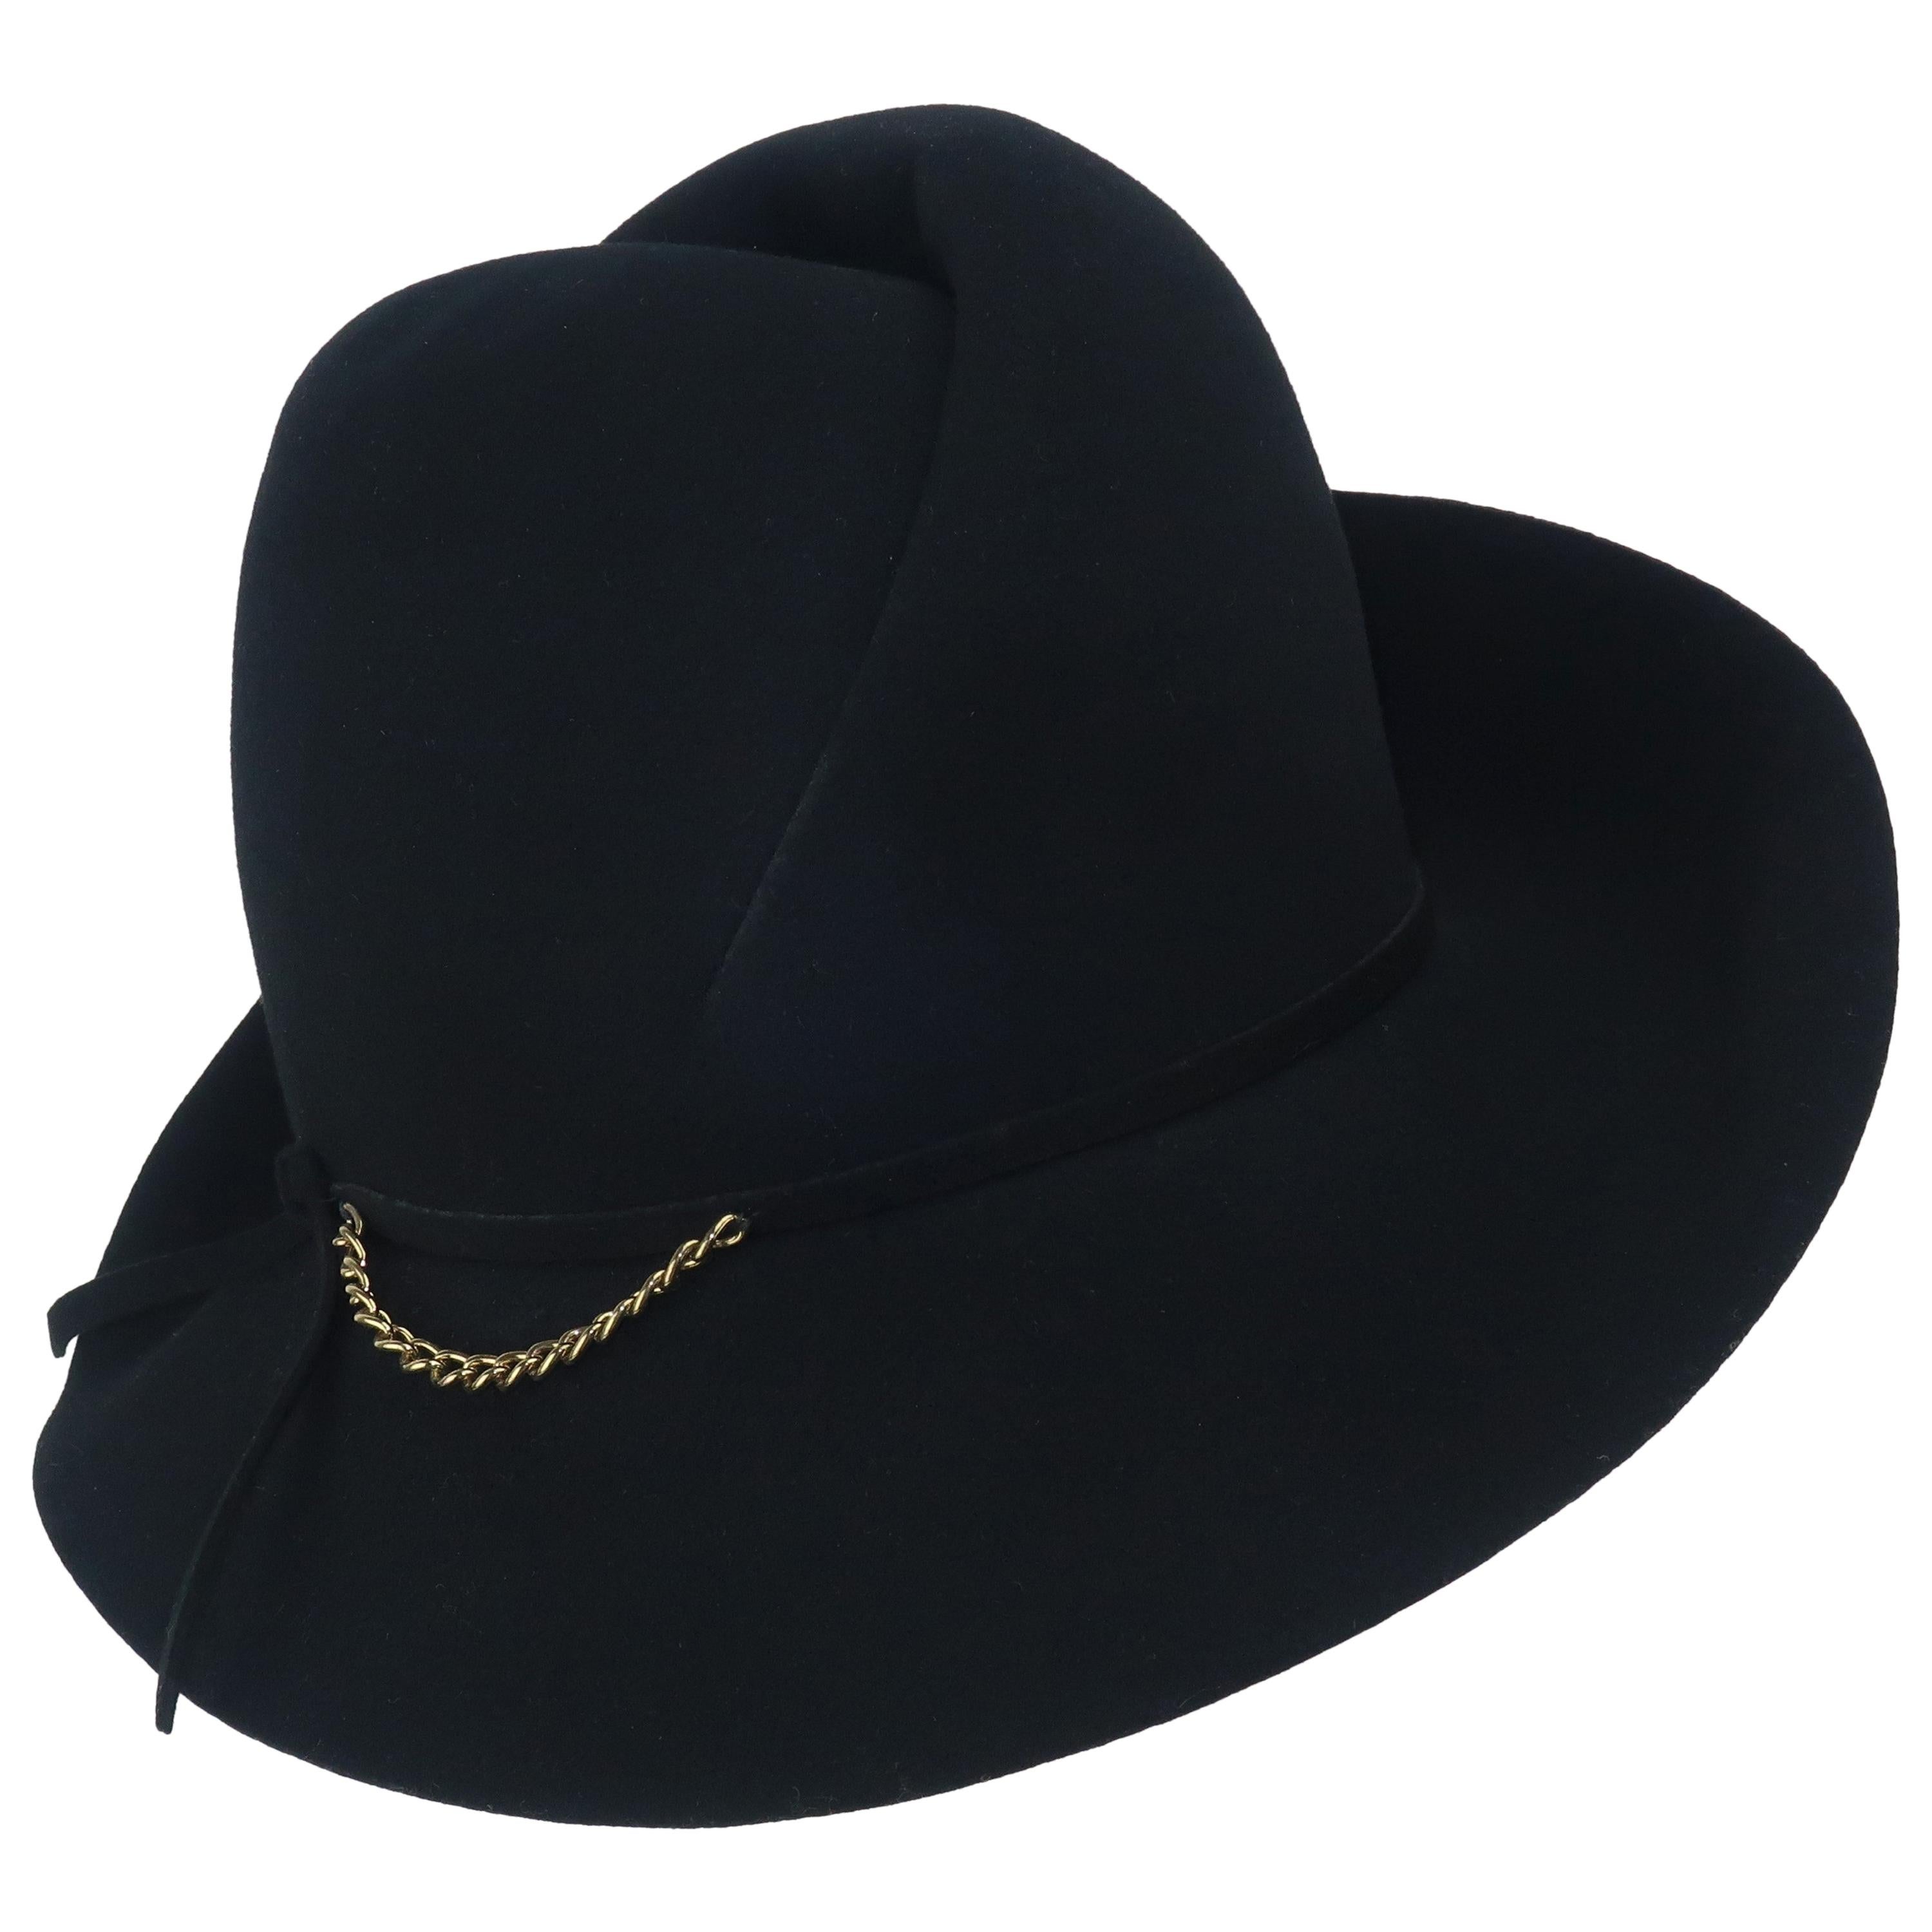 Mr. John Black Fedora Style Hat, C.1970